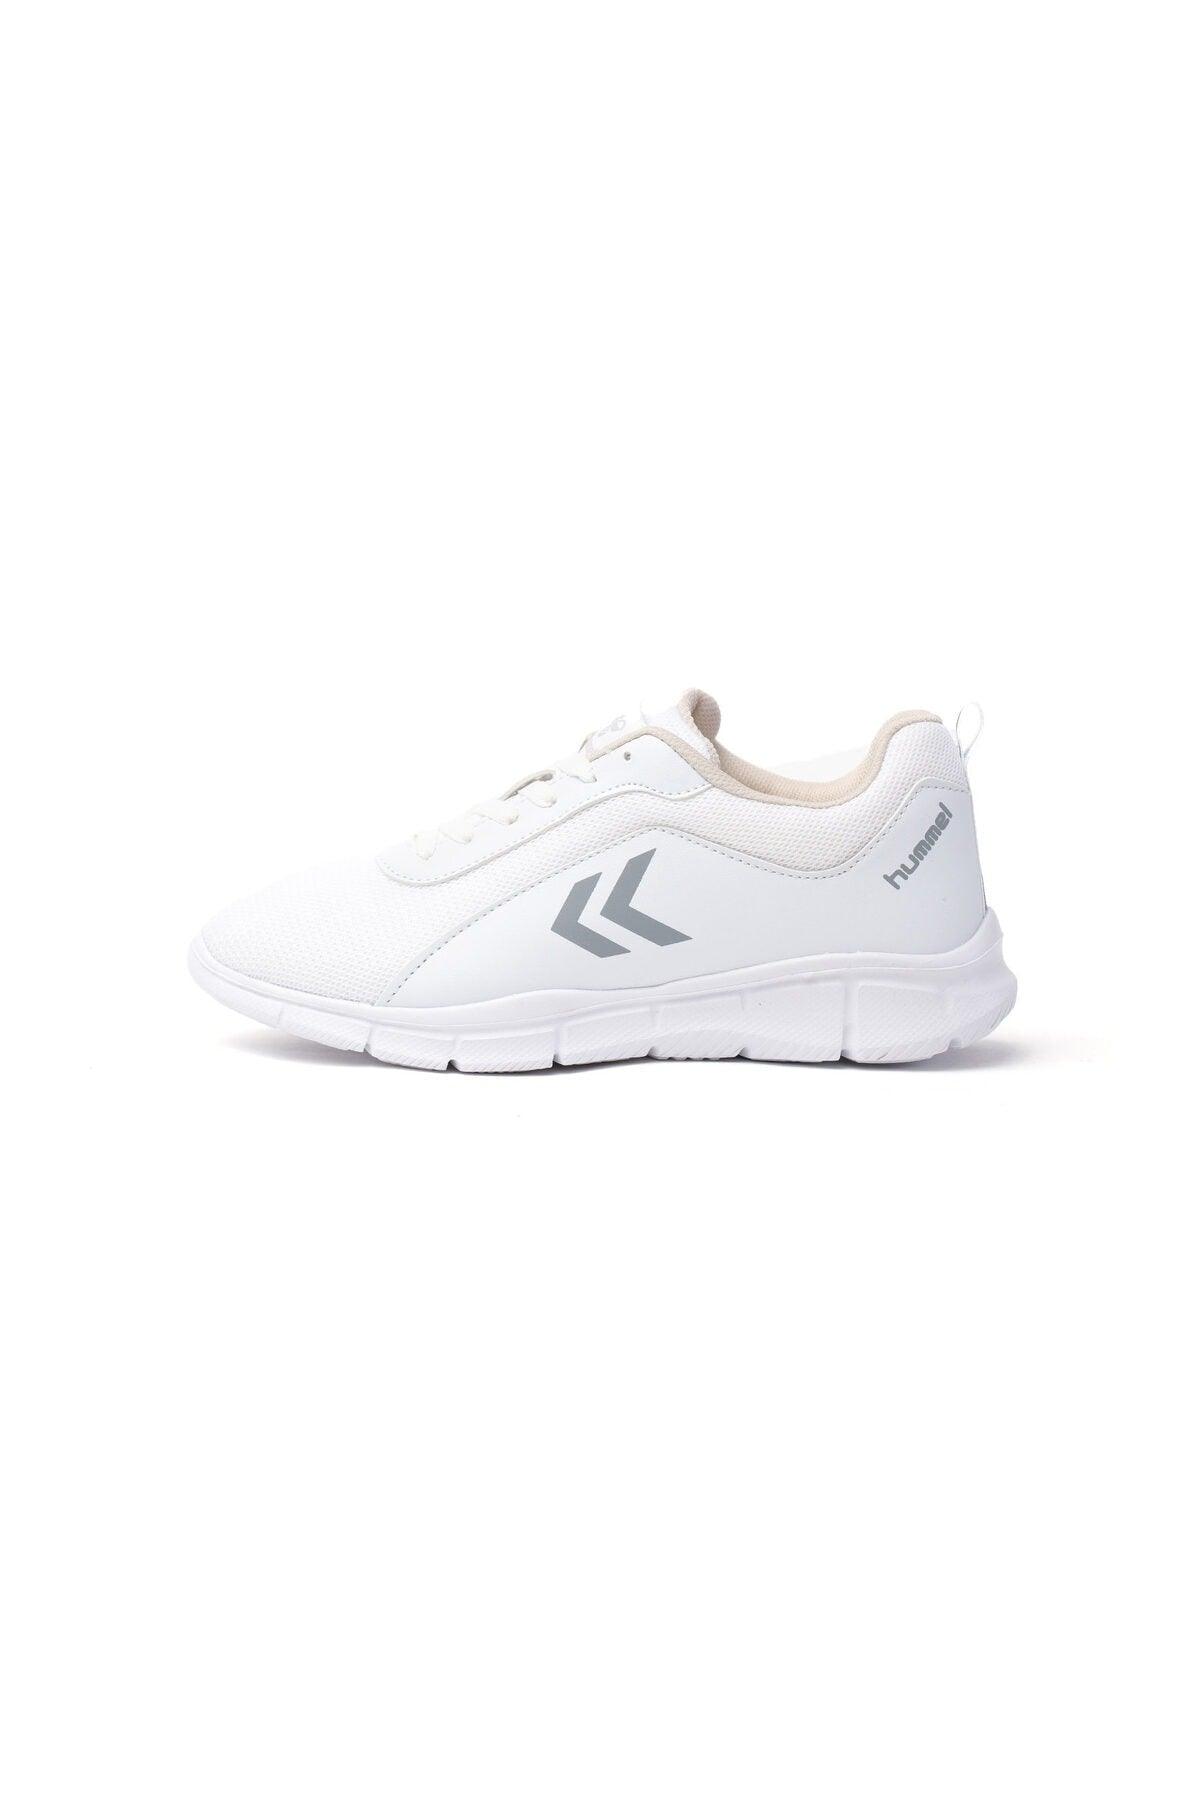 Ismir - Unisex White Sneakers - Swordslife